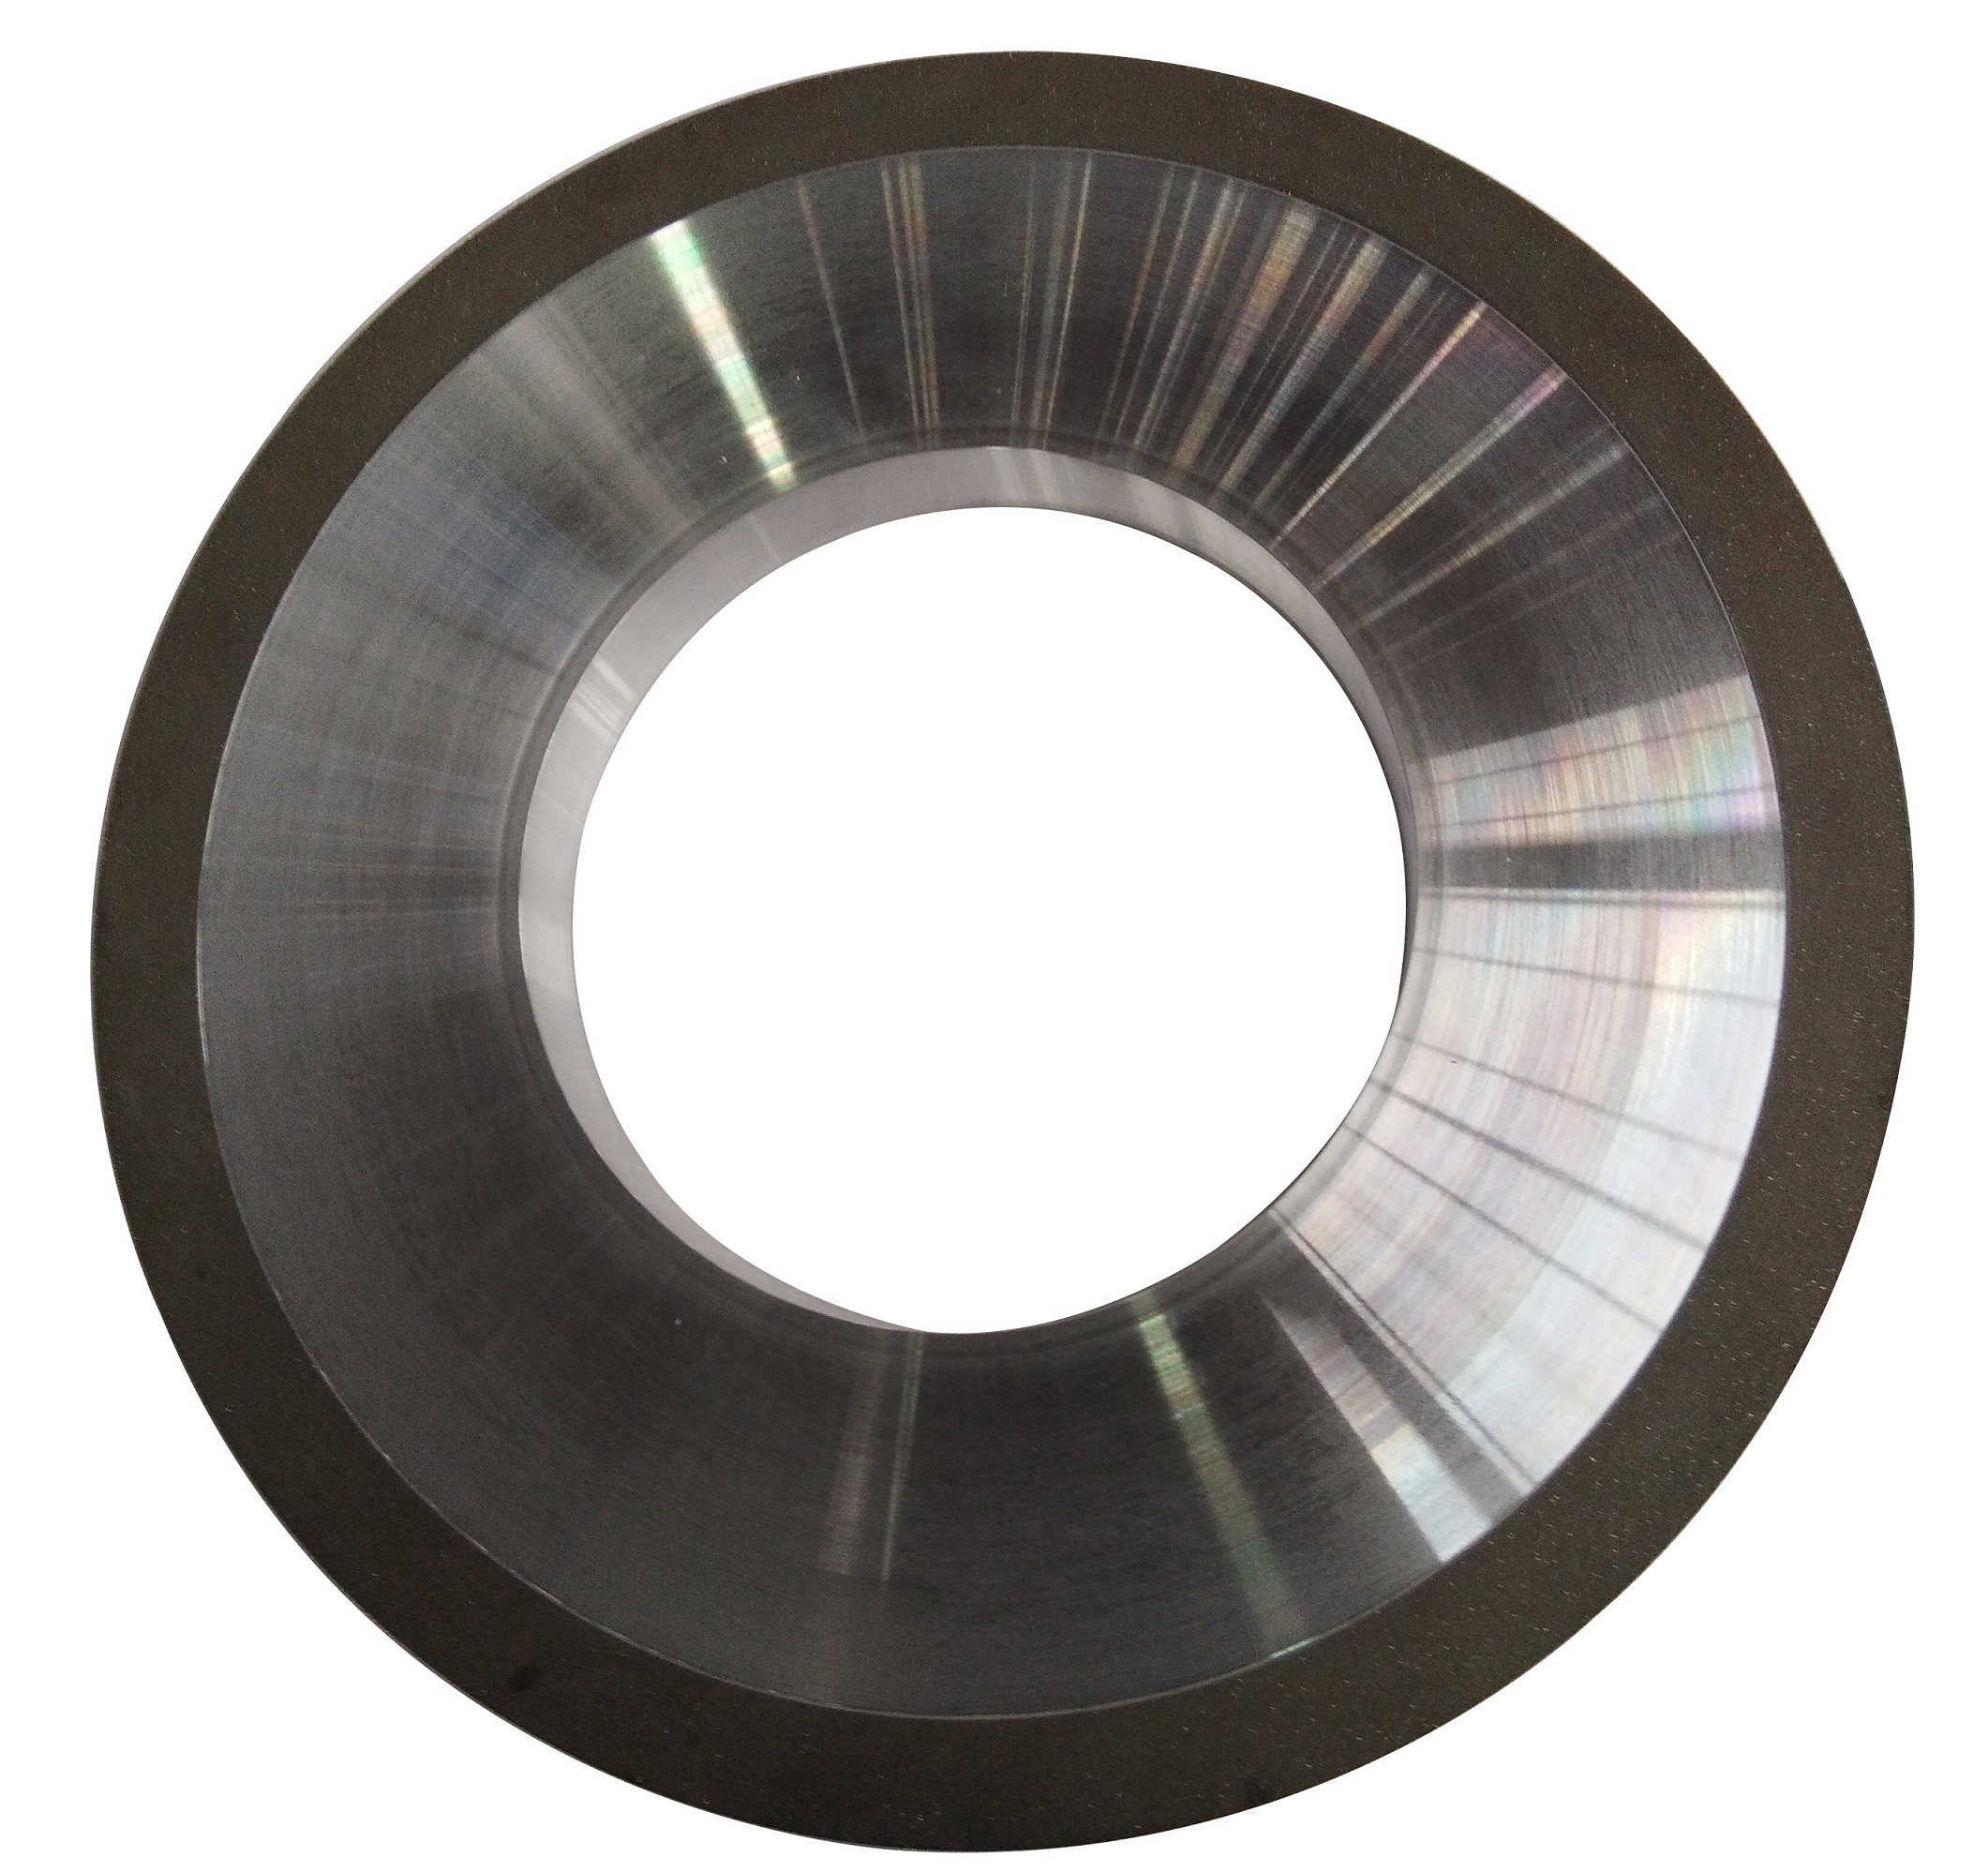 Quality Sharping Polishing Diamond Grinding Wheels Resin Bonded Flat Cup Bowl Disc Shape for sale